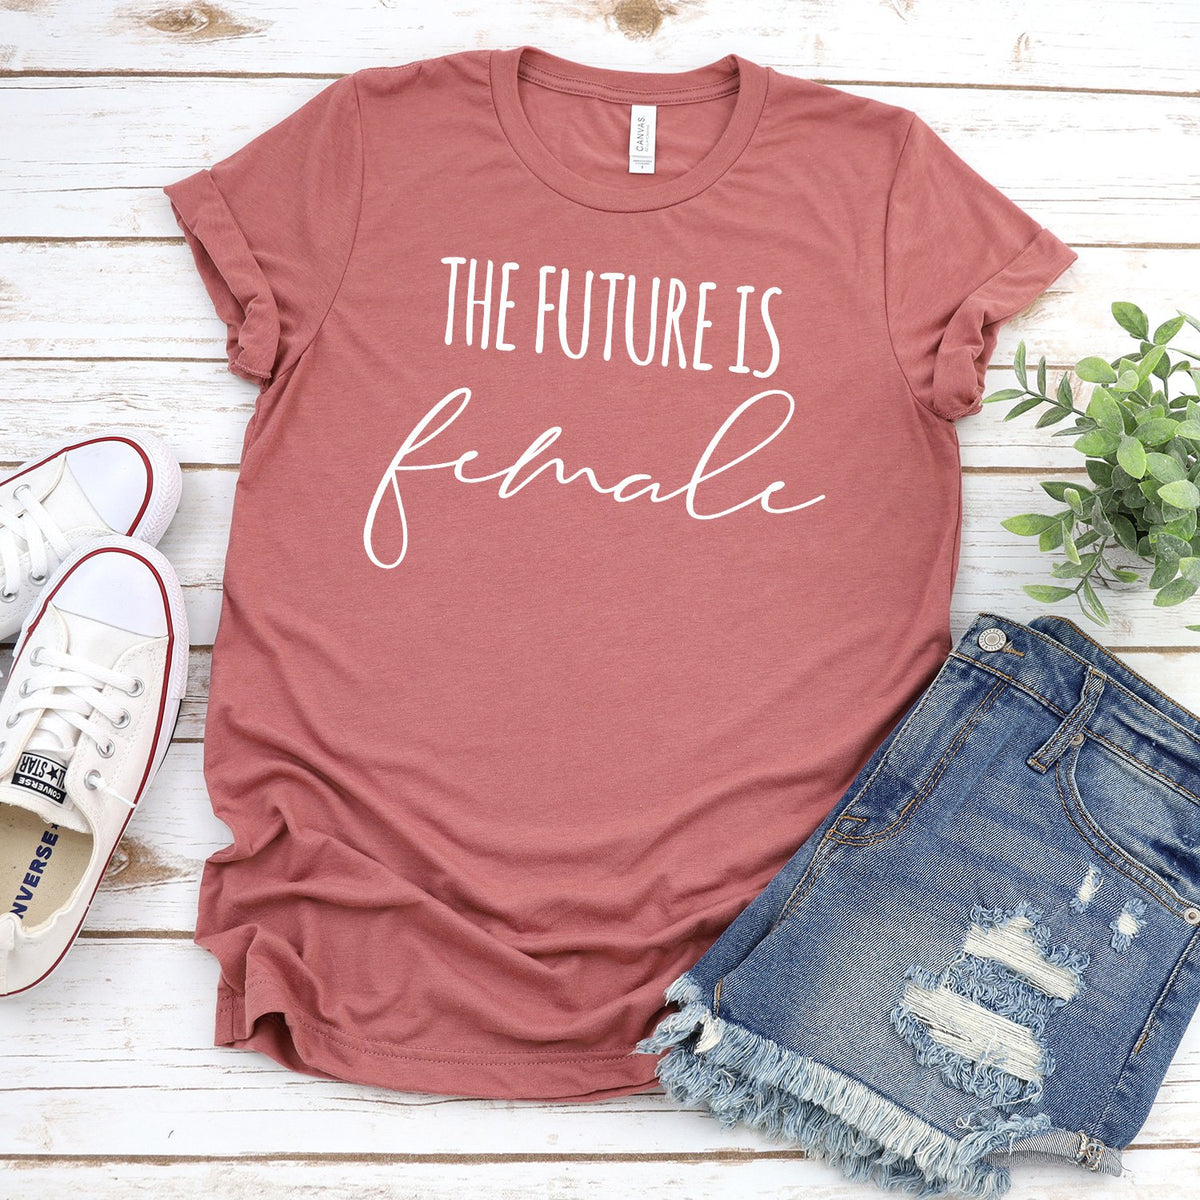 The Future is Female - Short Sleeve Tee Shirt